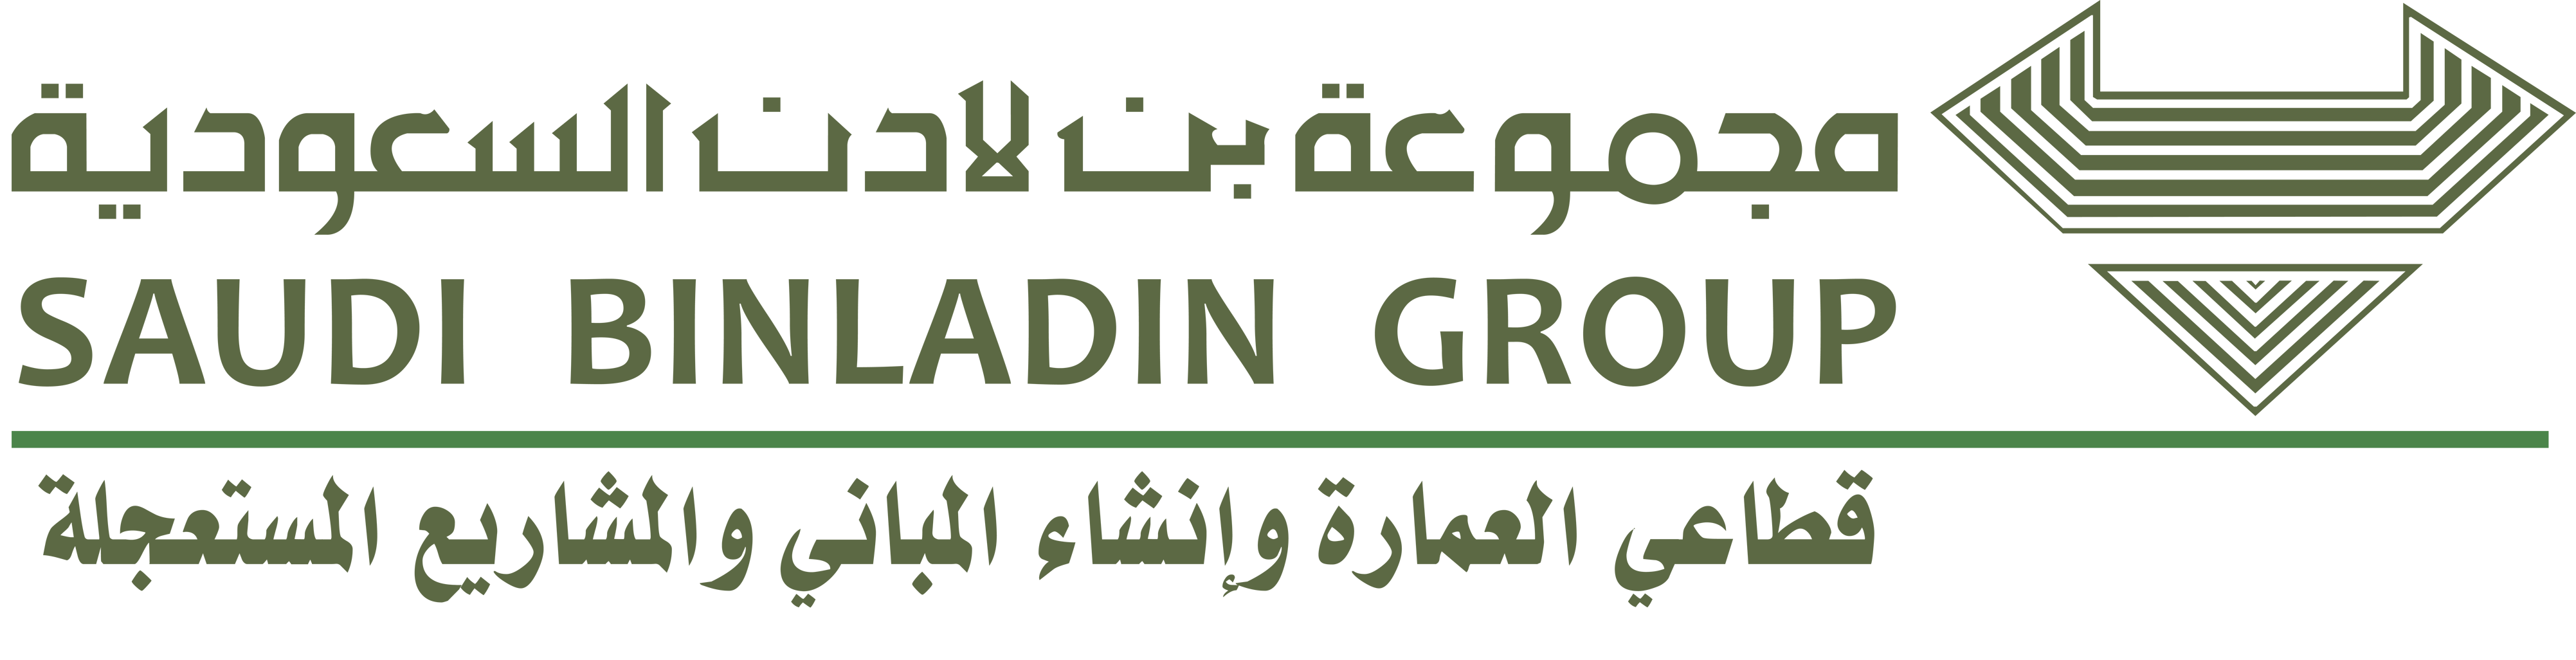 Saudi BinLadin